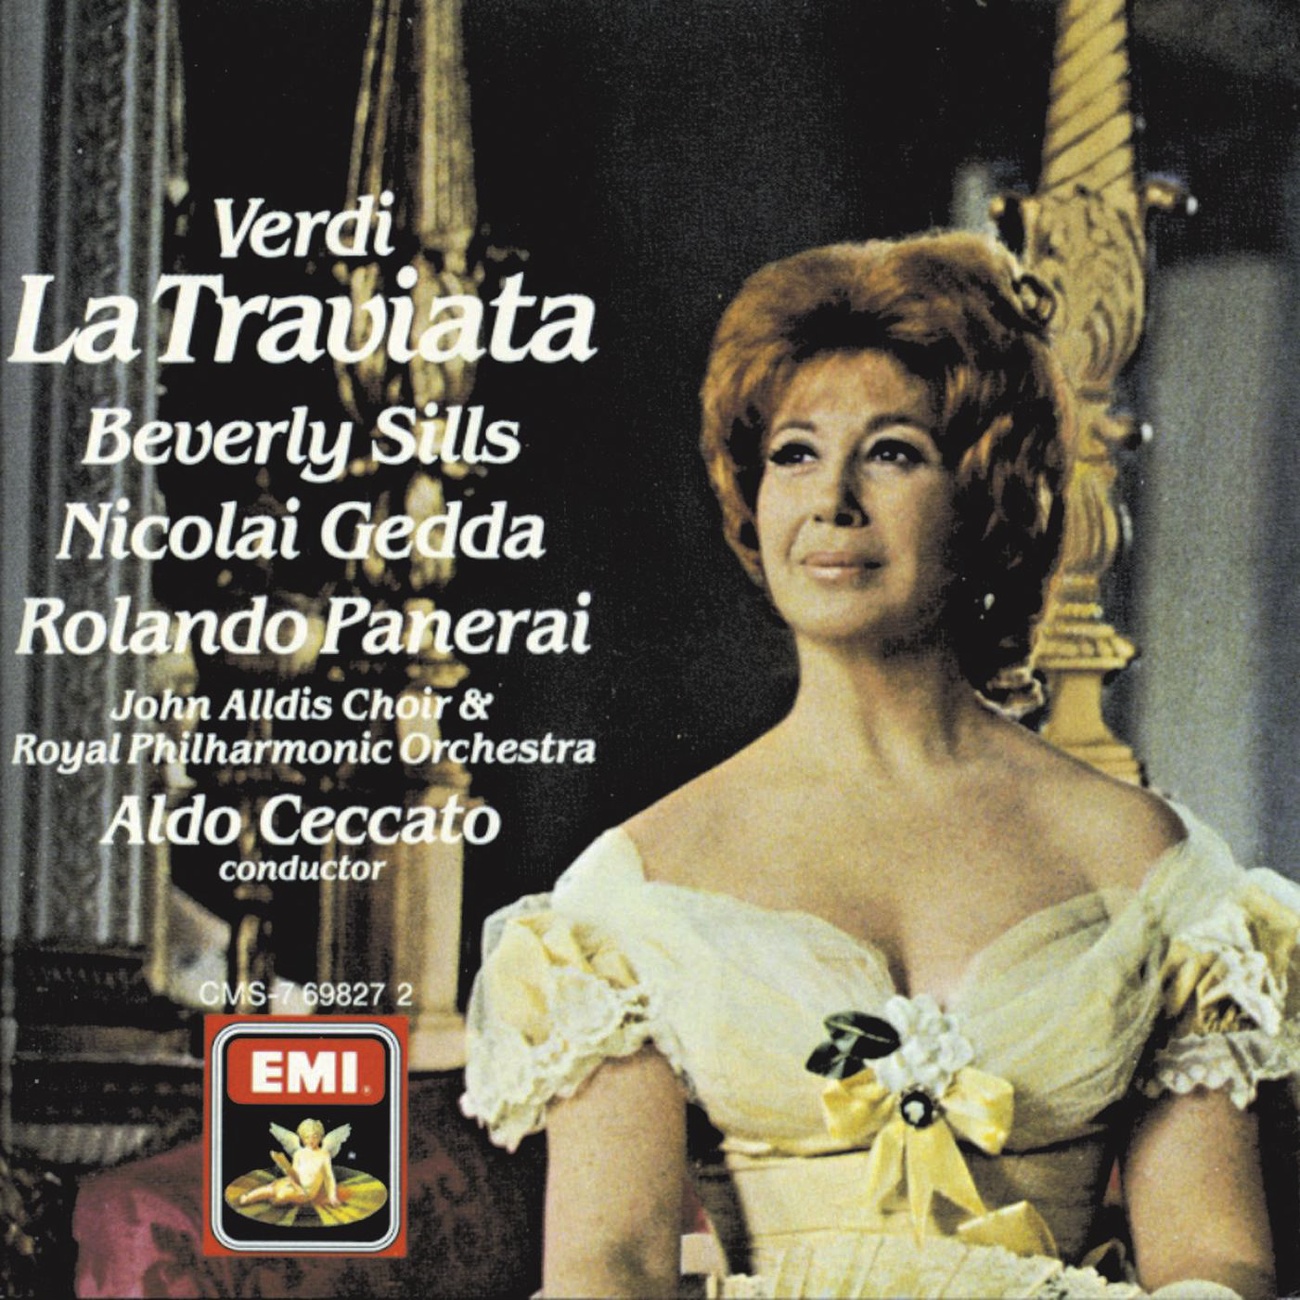 La Traviata (1988 Digital Remaster), Act III: Prelude